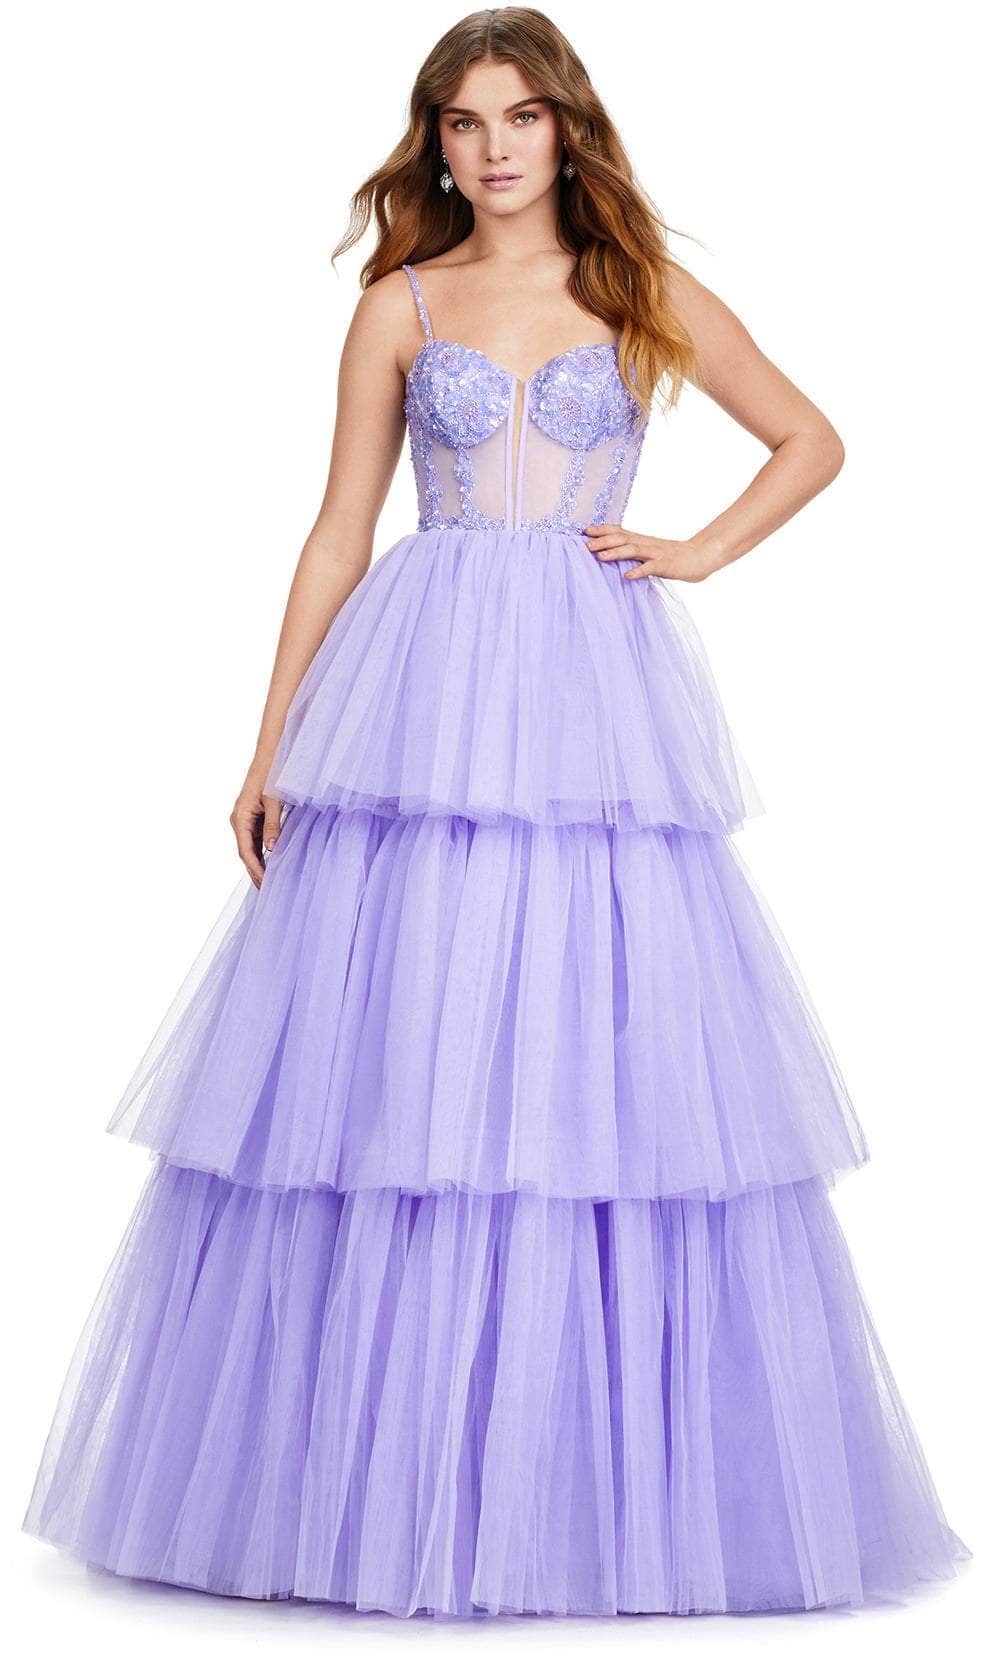 Ashley Lauren 11462 - Beaded Corset Tulle Prom Dress 00 /  Lilac